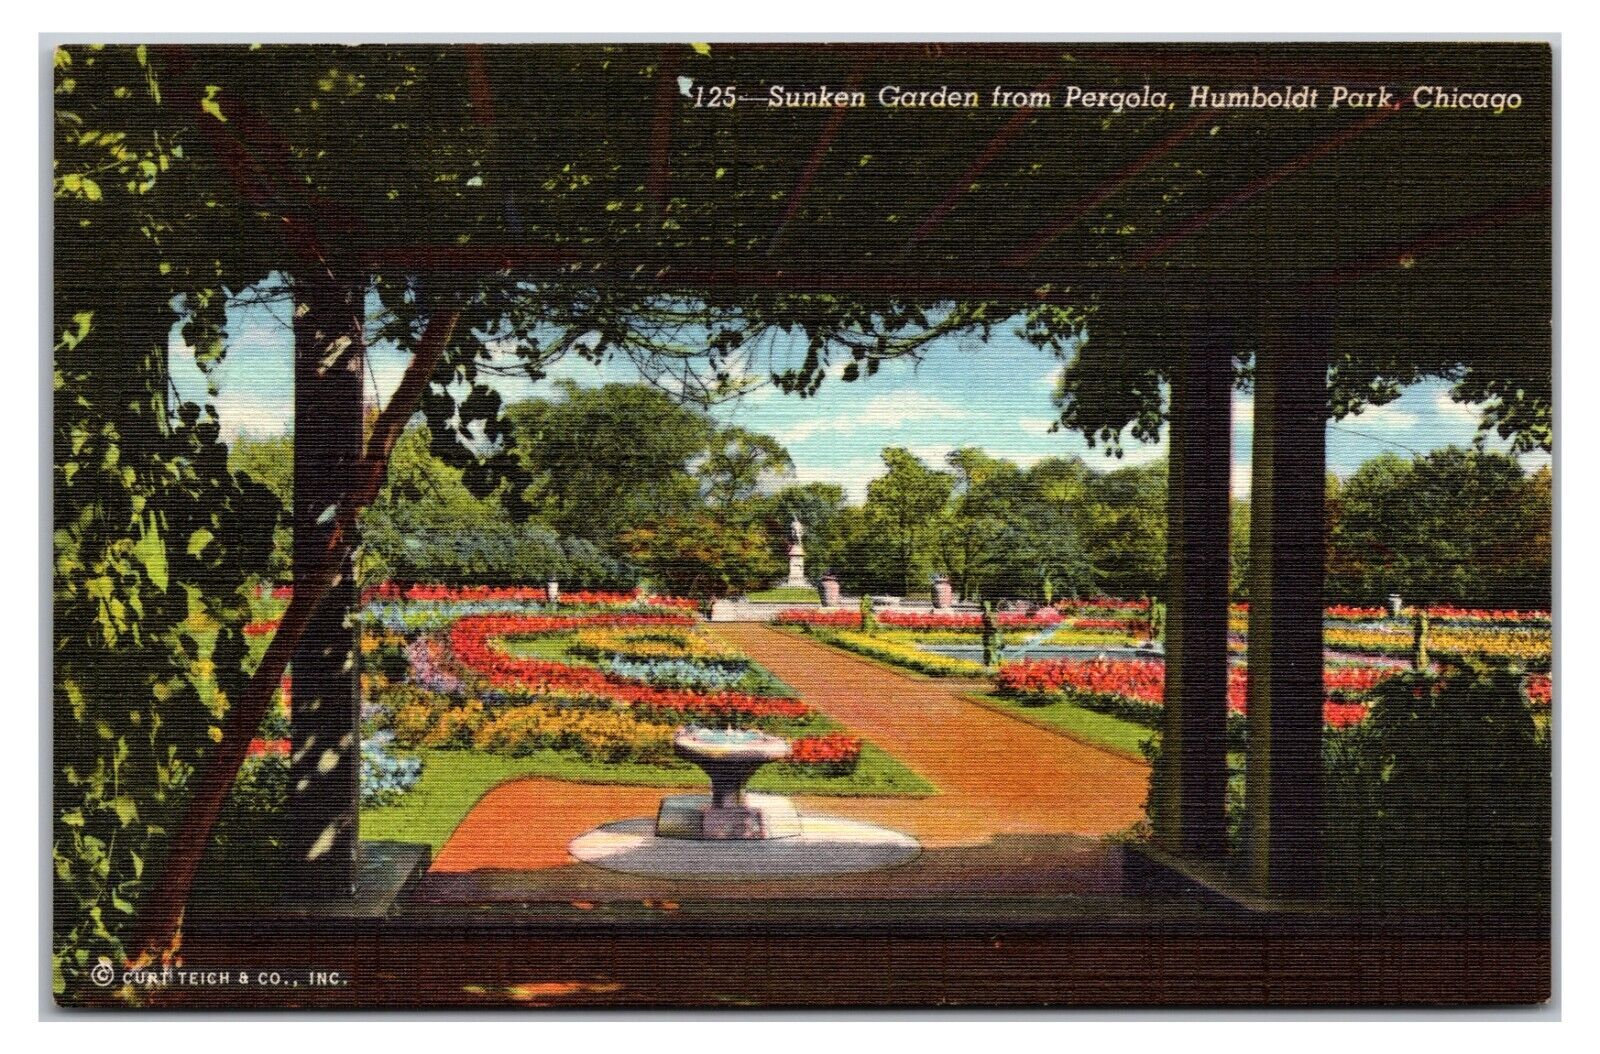 VTG 1930s - Sunken Gardens Humboldt Park, Chicago, Illinois Postcard (UnPosted)